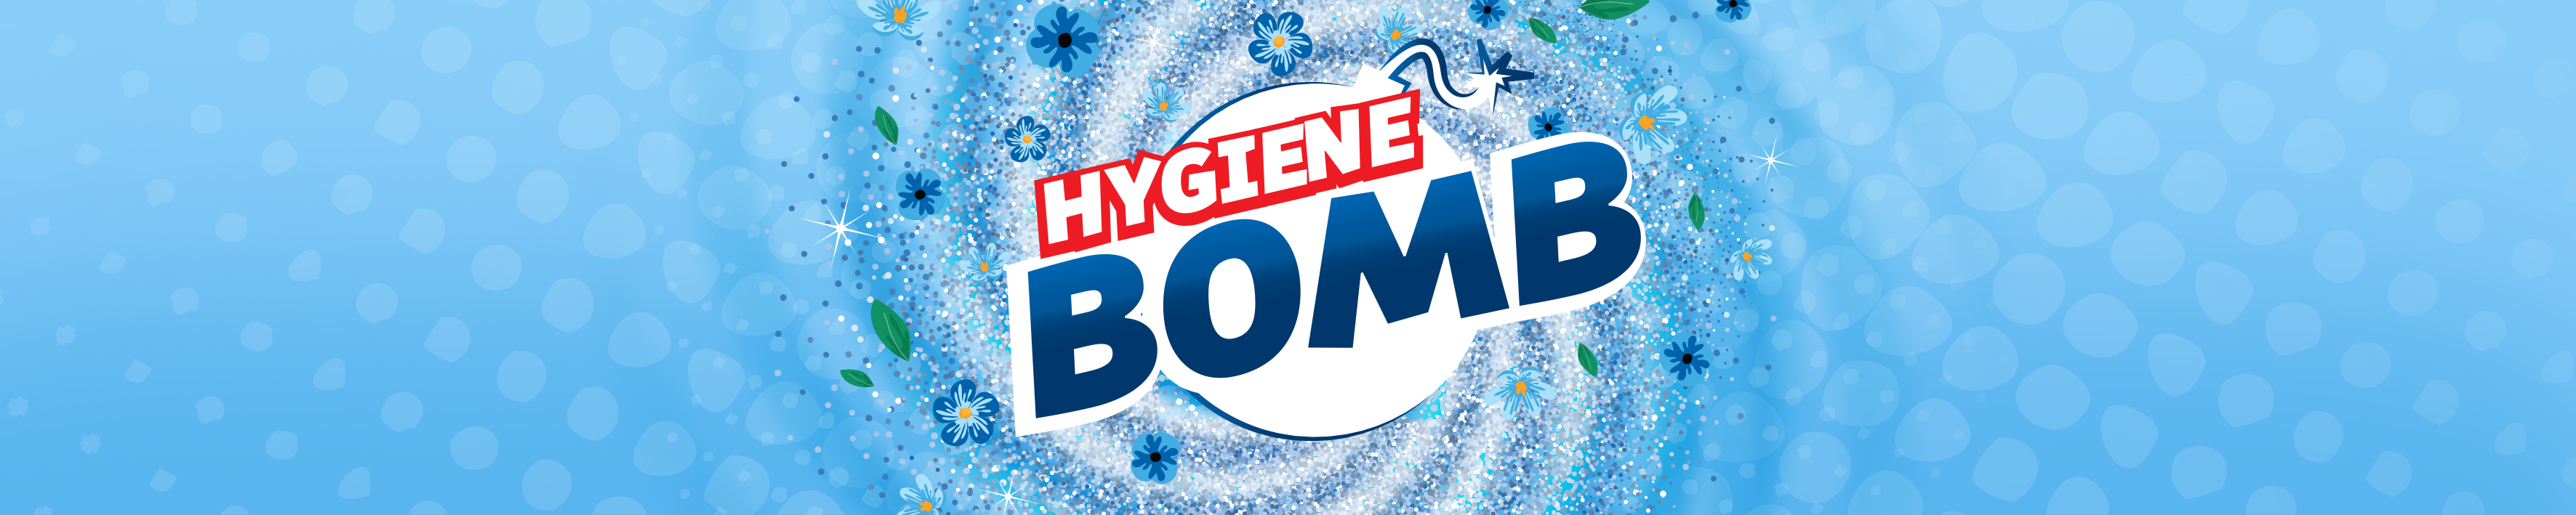 HYGIENE BOMB